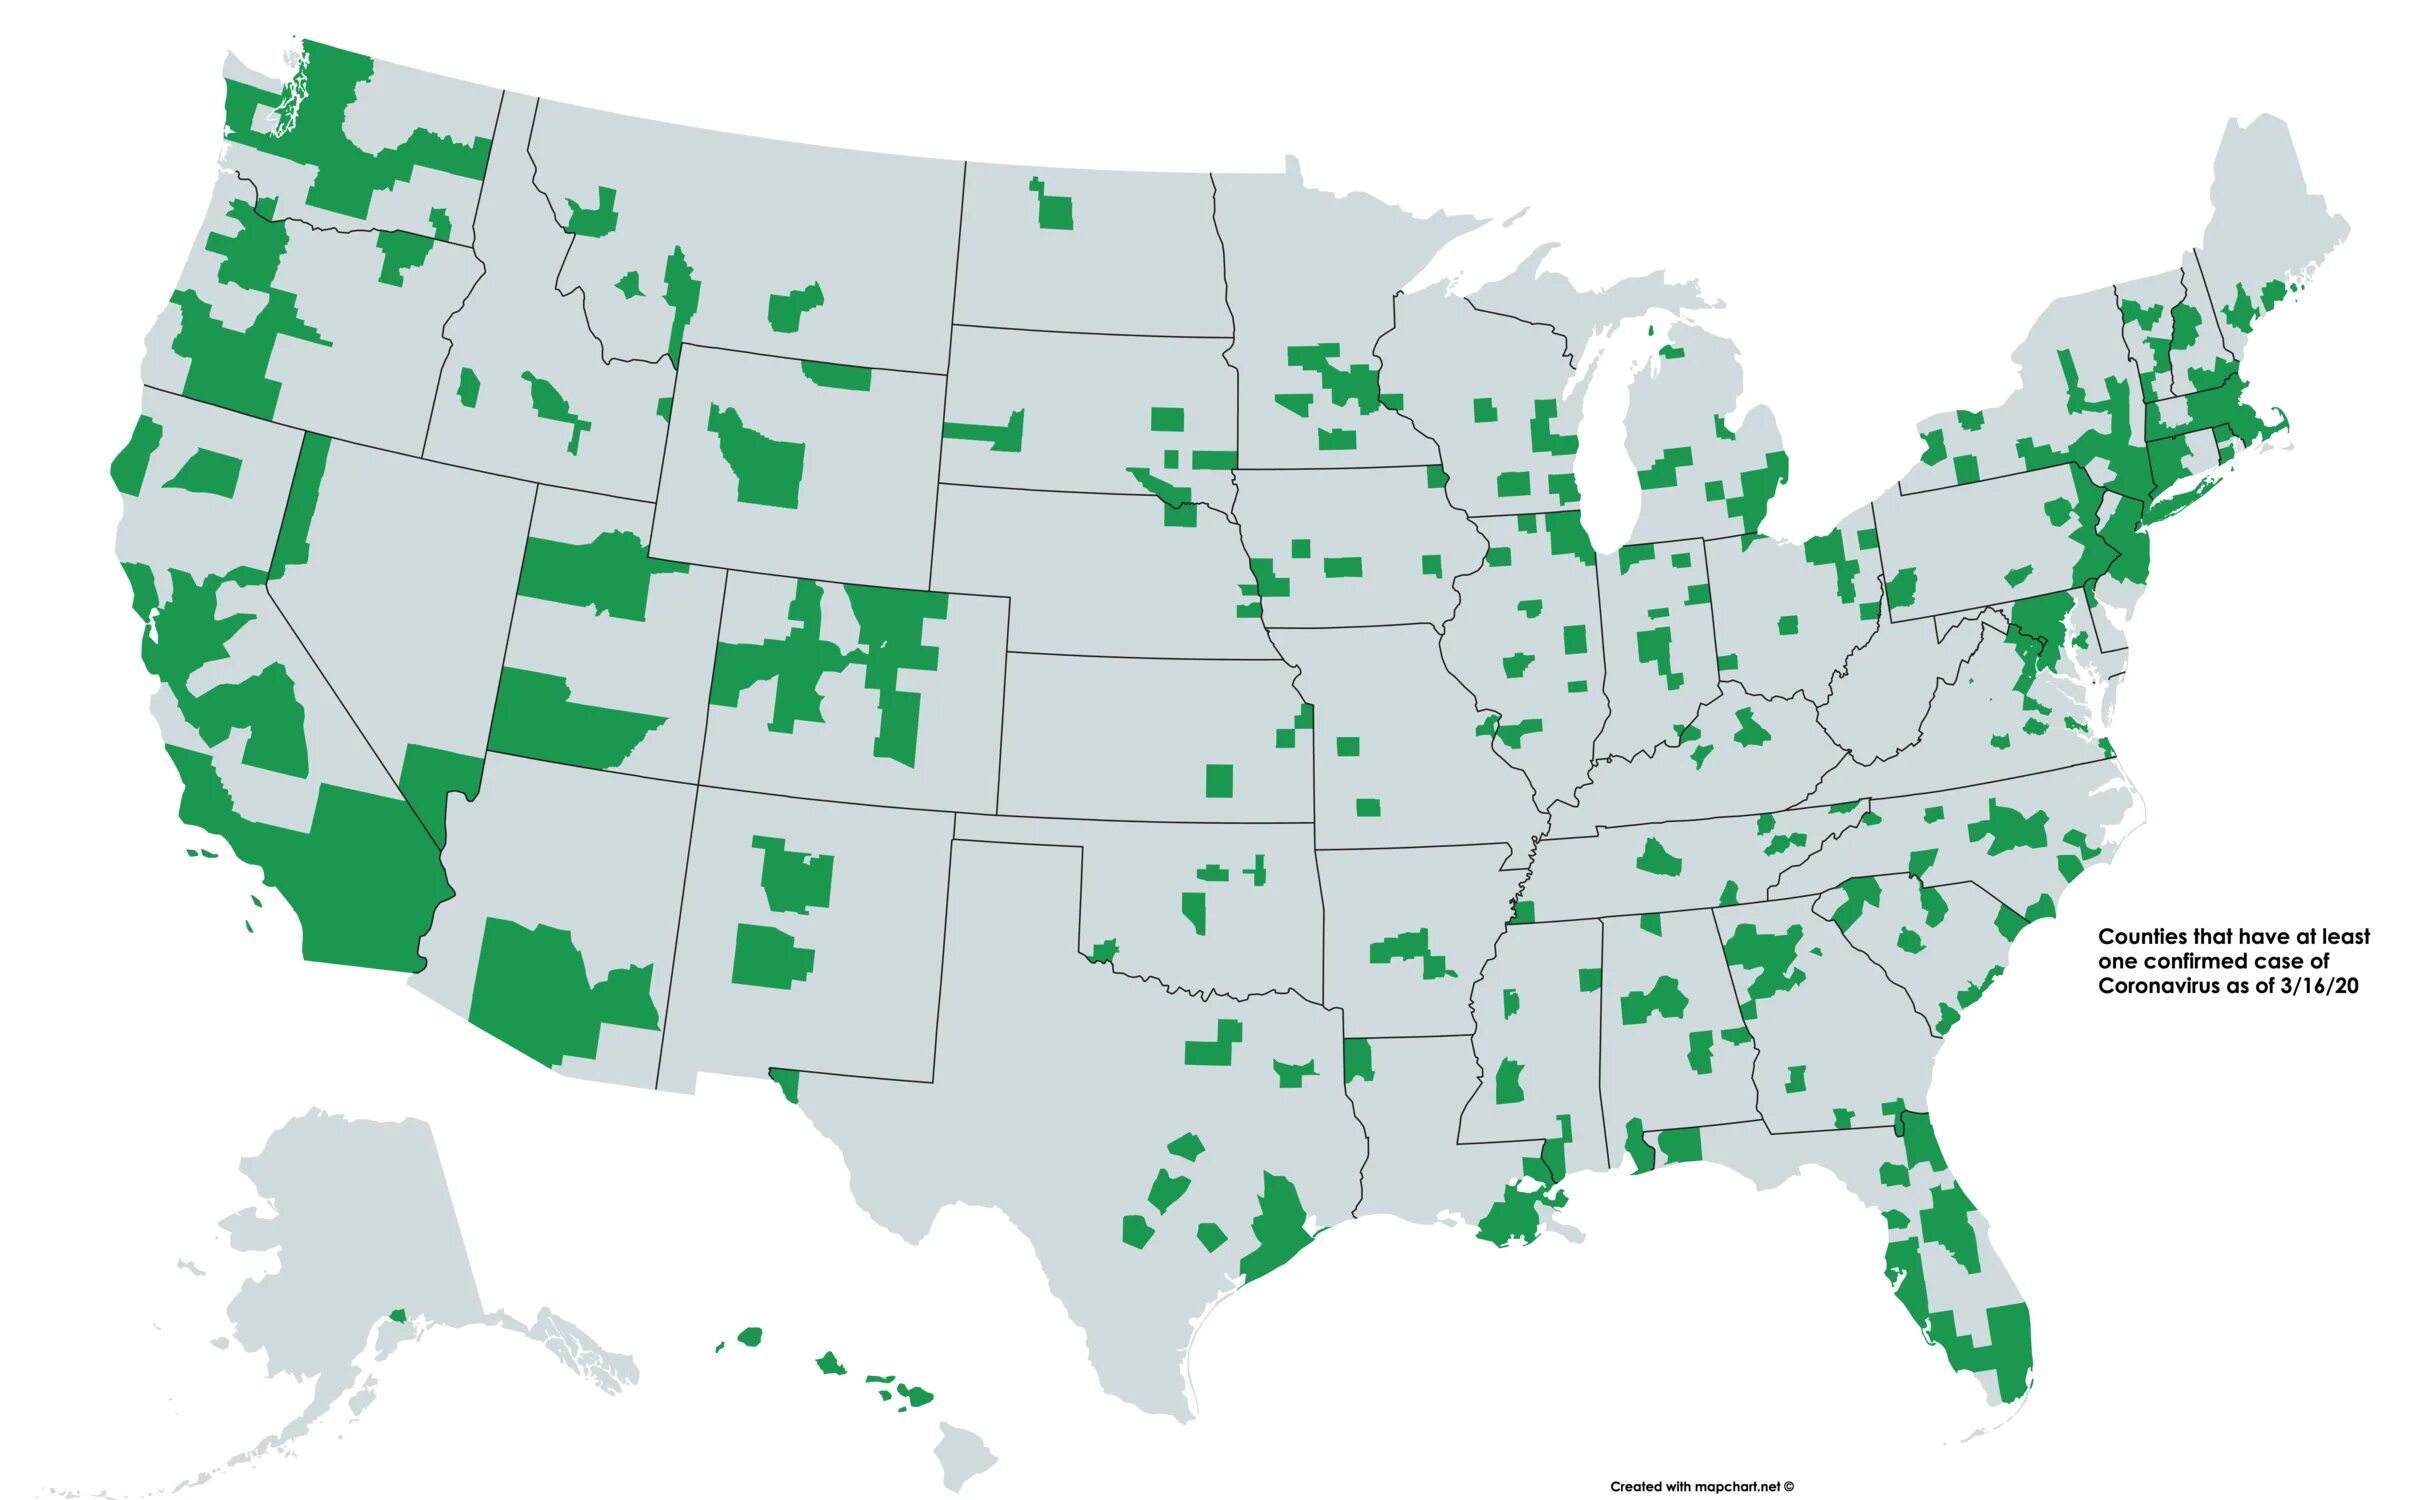 Mapchart изображения. Карта США по Каунти. Map Chart. Ккузгиджшсфт сщгтешуы ща еру гы. 21 19 на карте